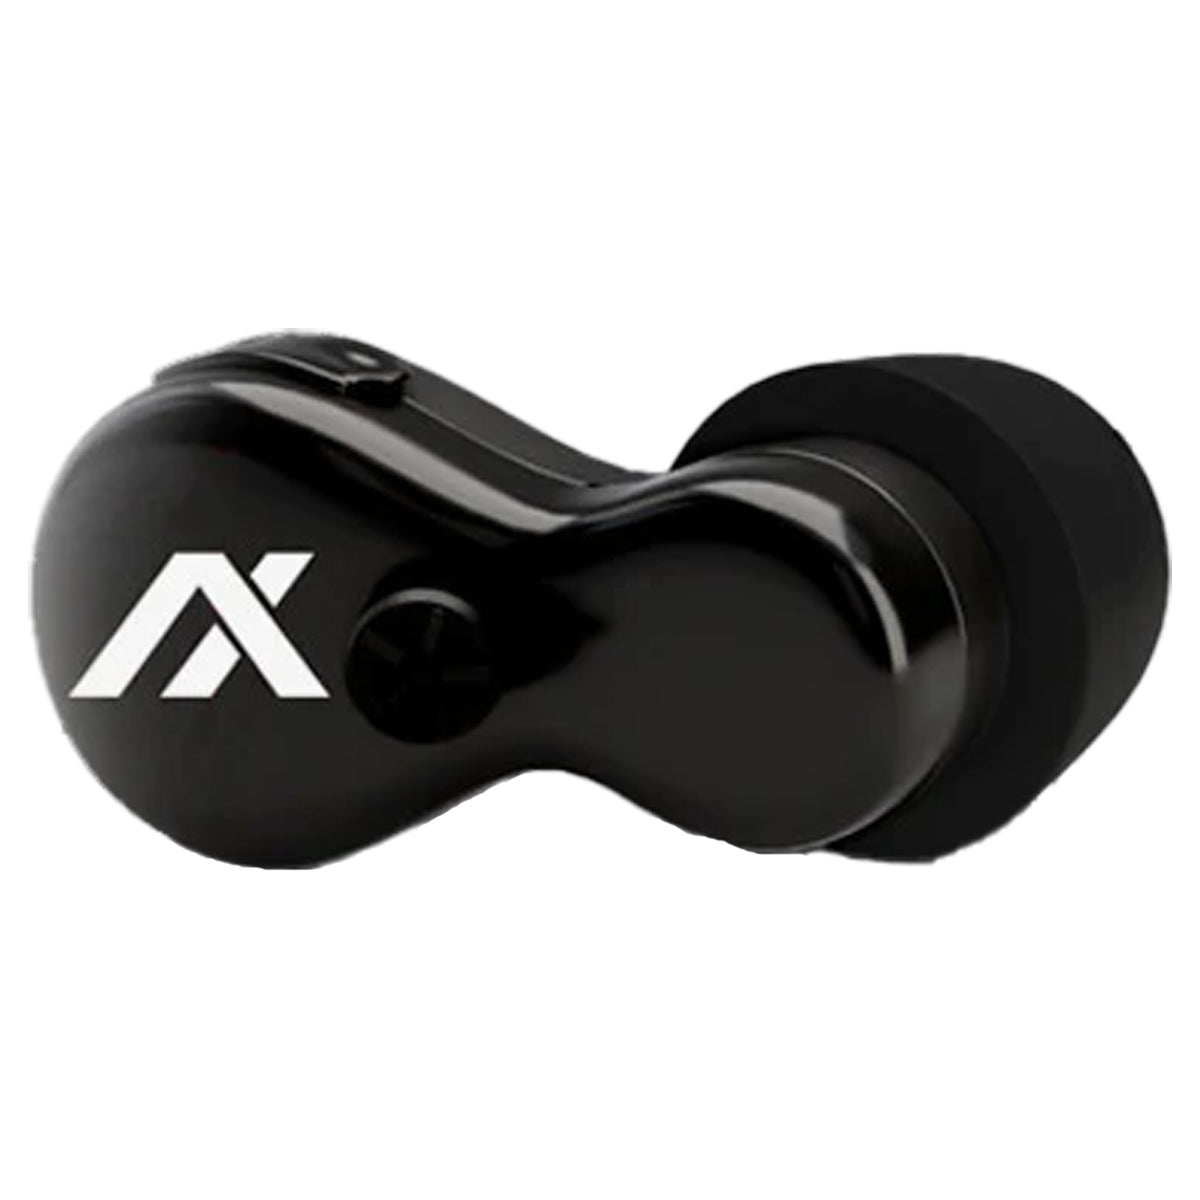 Axil GS Digital 2 Ear Buds